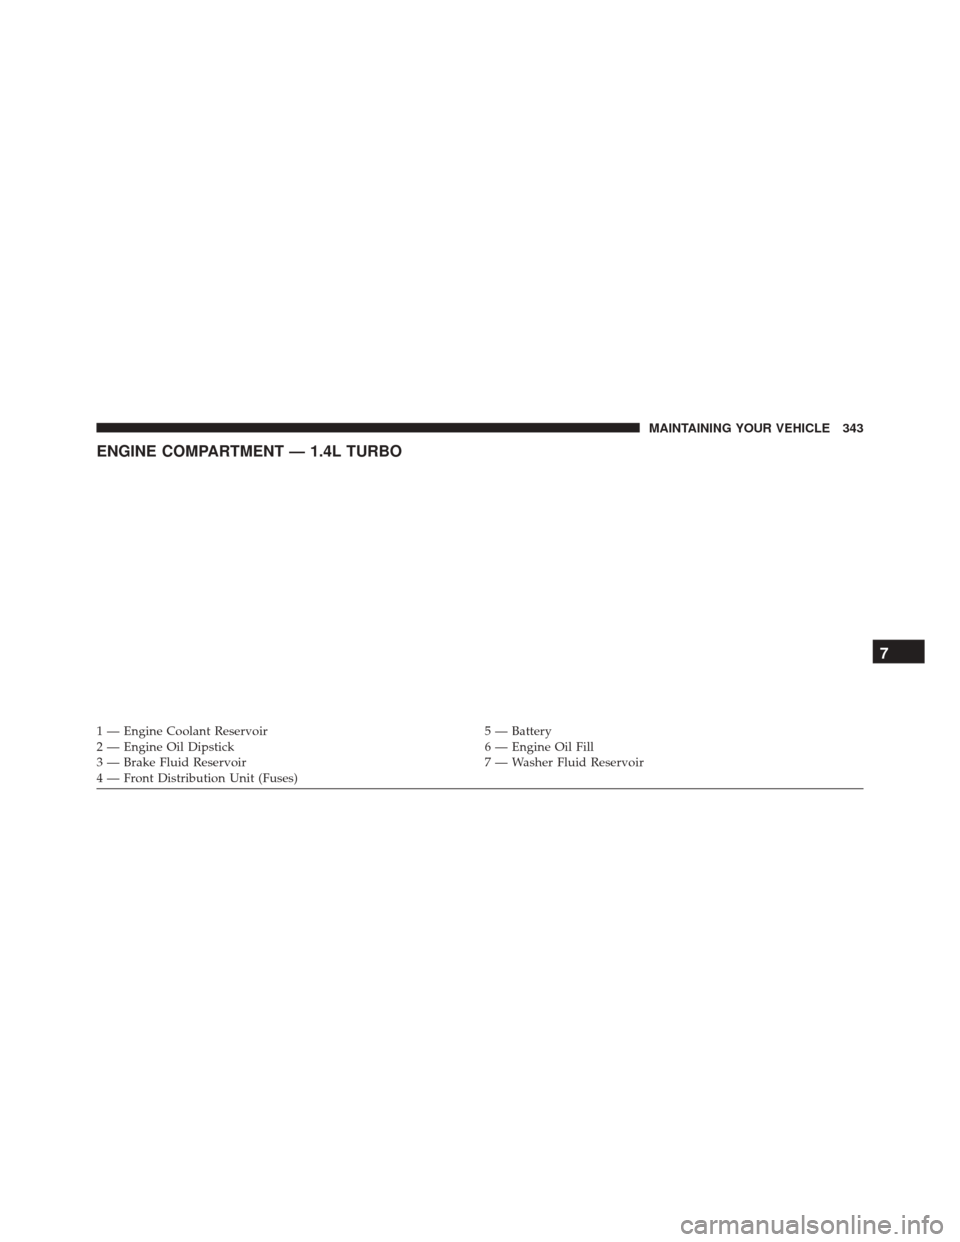 FIAT 500 ABARTH 2016 2.G Owners Manual ENGINE COMPARTMENT — 1.4L TURBO
1 — Engine Coolant Reservoir5 — Battery
2 — Engine Oil Dipstick 6 — Engine Oil Fill
3 — Brake Fluid Reservoir 7 — Washer Fluid Reservoir
4 — Front Distr